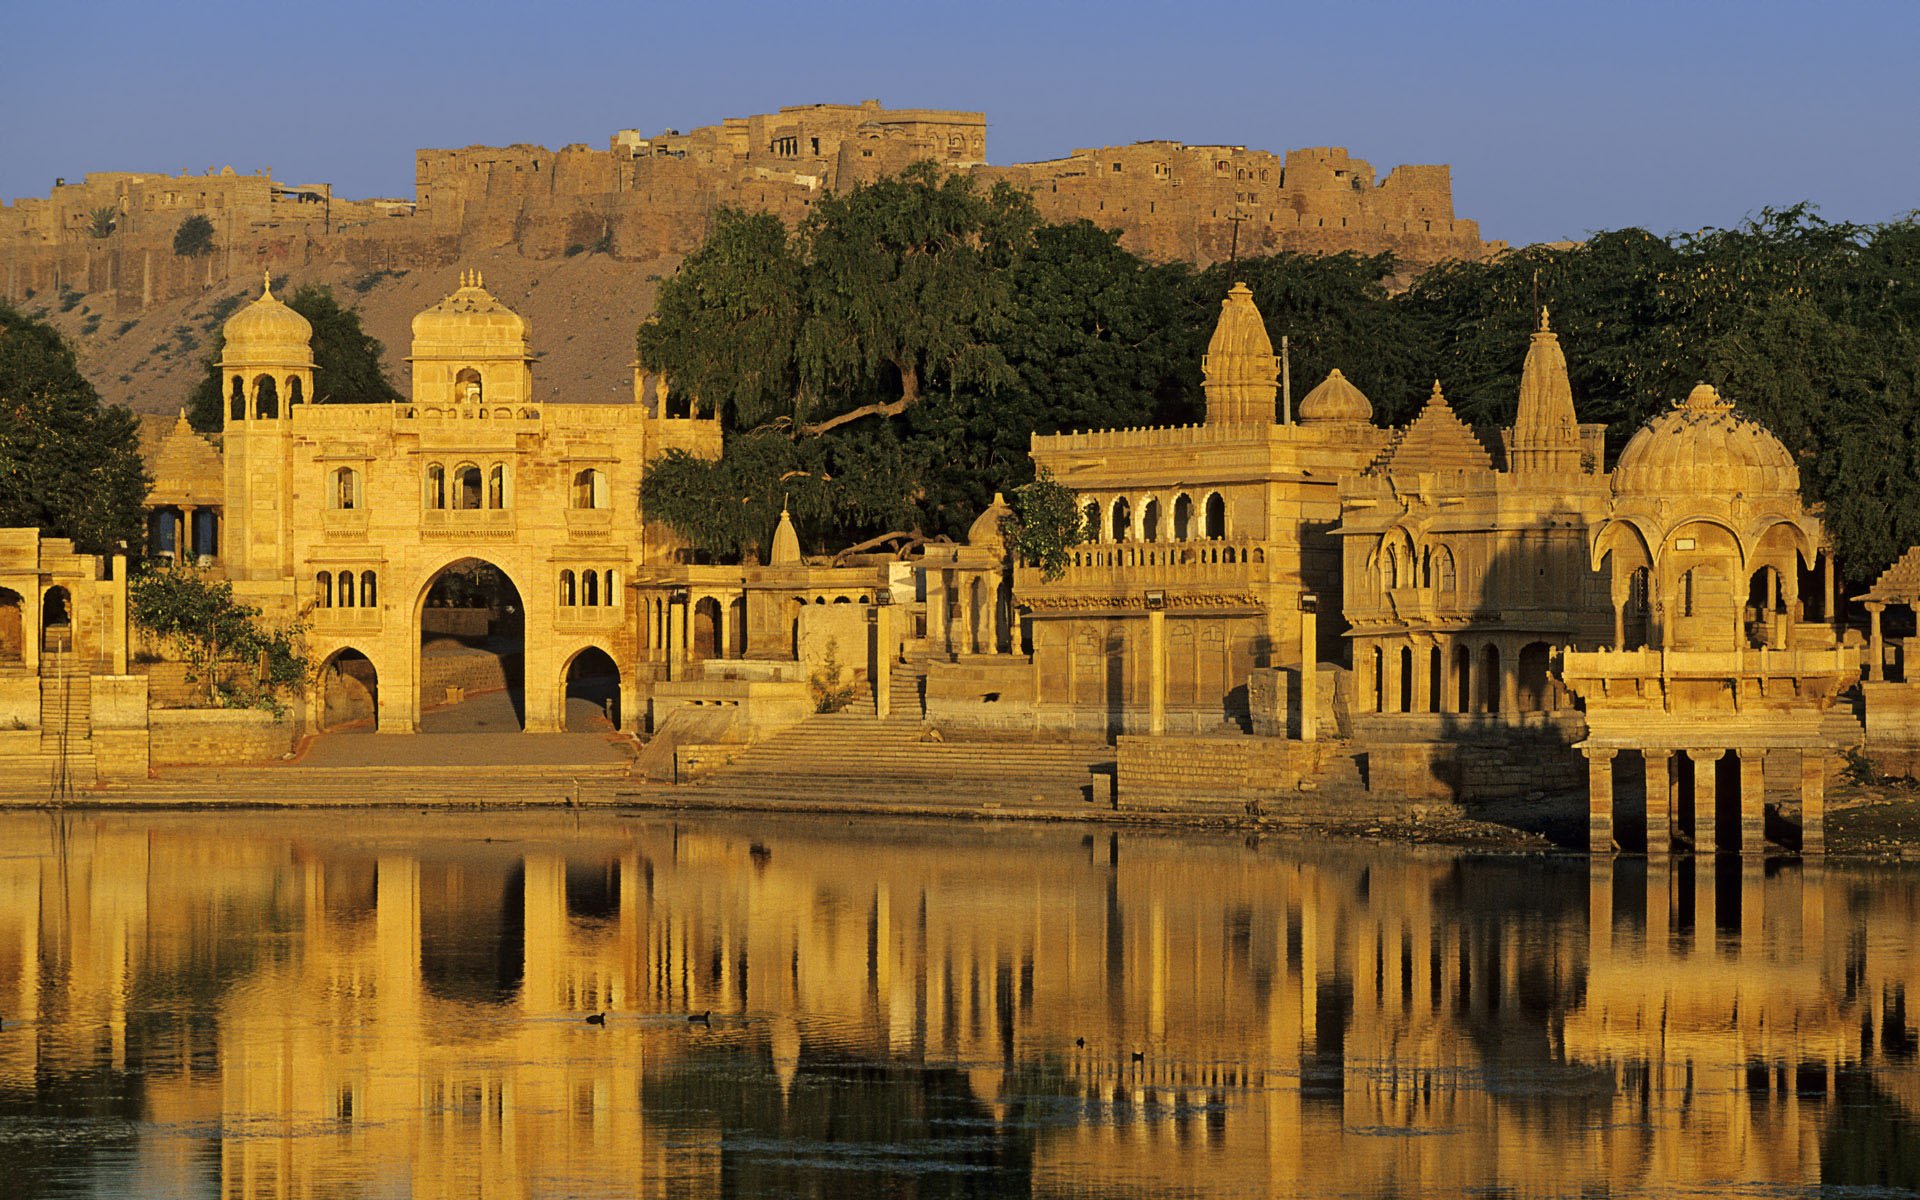 jaisalmer tourist place pic